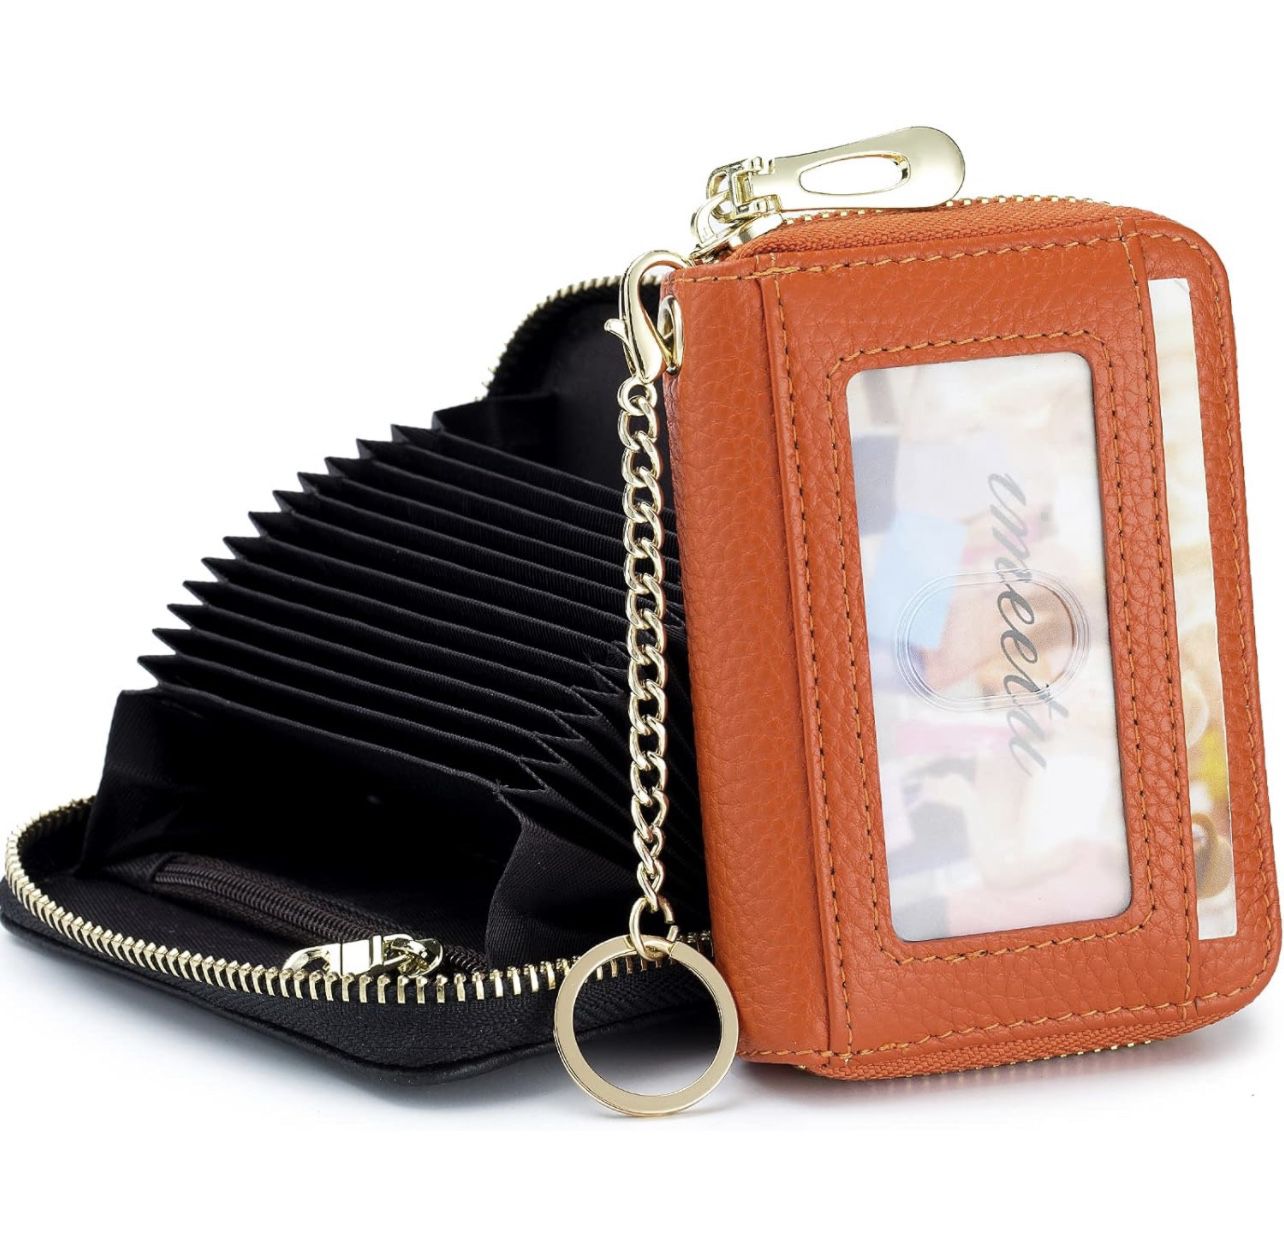 Wallet Orange , meetu RFID Credit Card Holder, Small Leather Zipper Card Case Wallet with Removable Keychain ID Window (Orange)